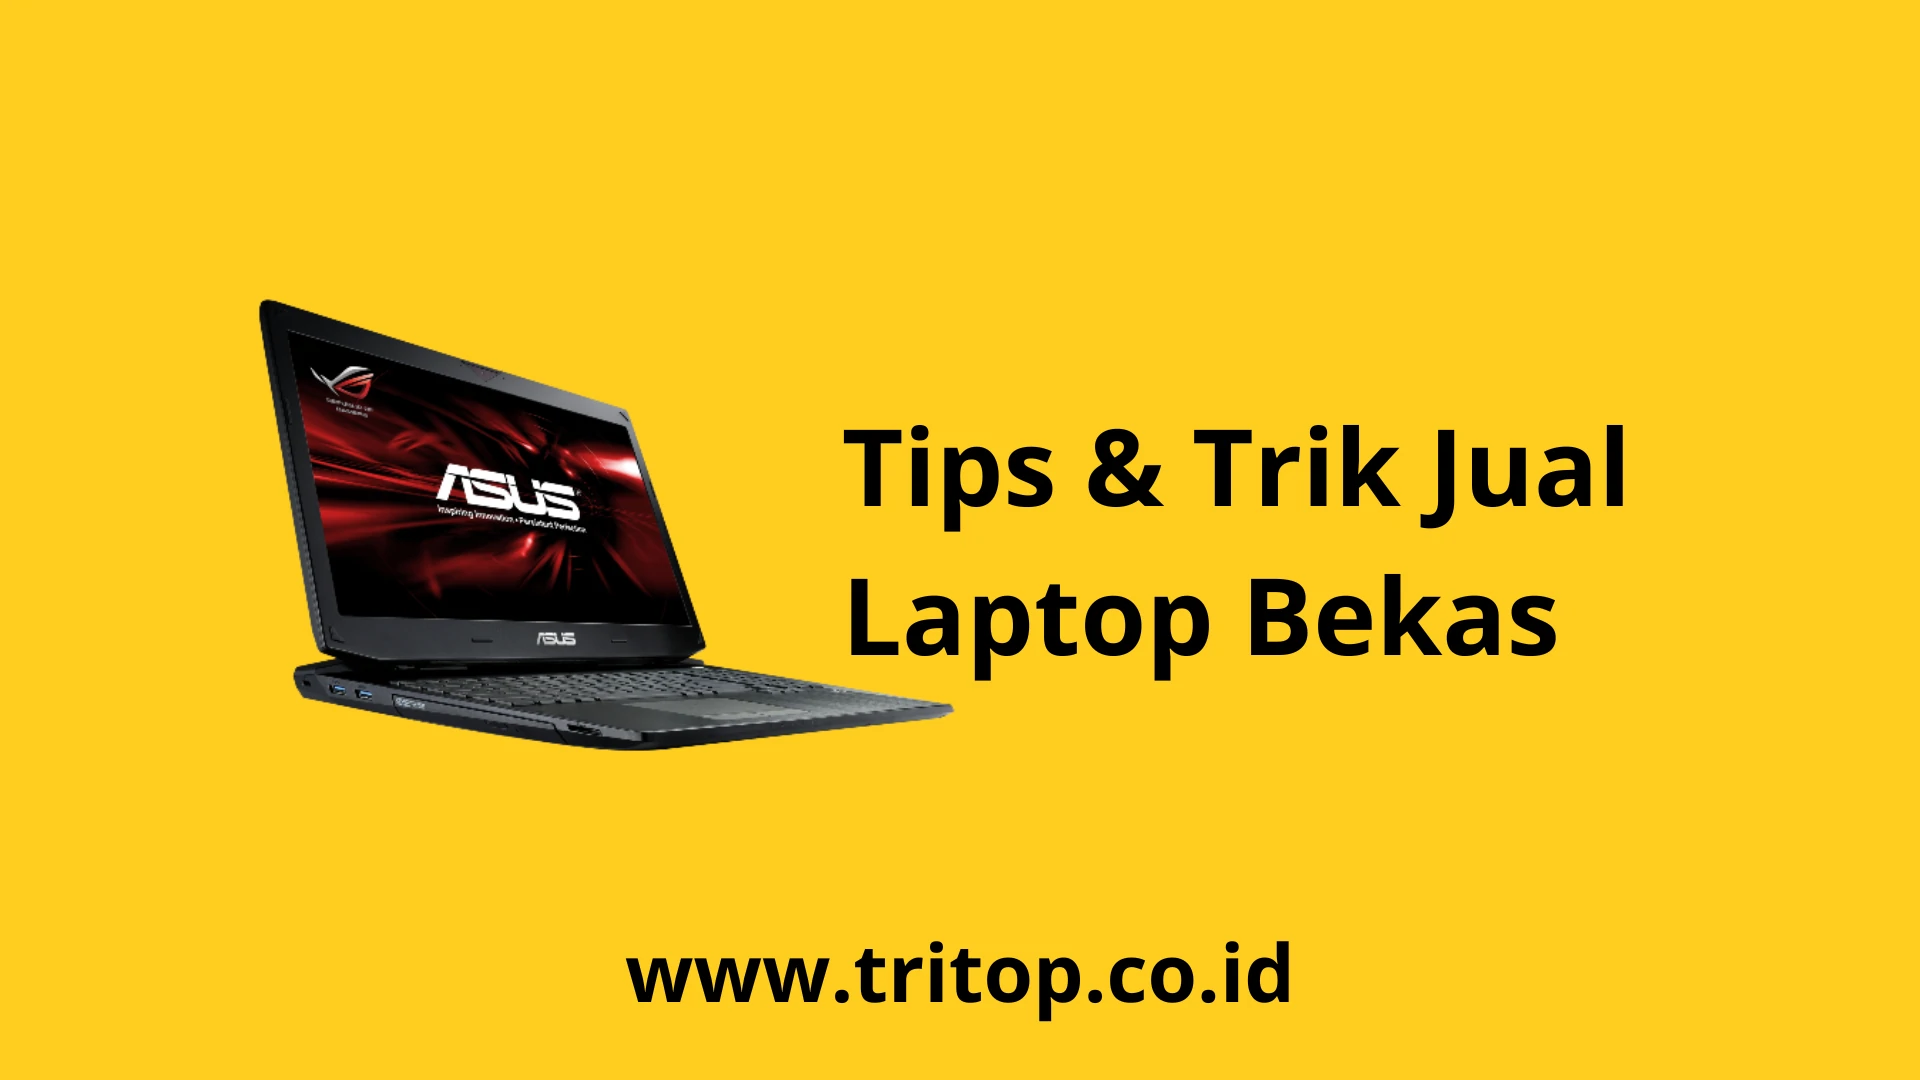 Jual Laptop Bekas Tritop.co.id